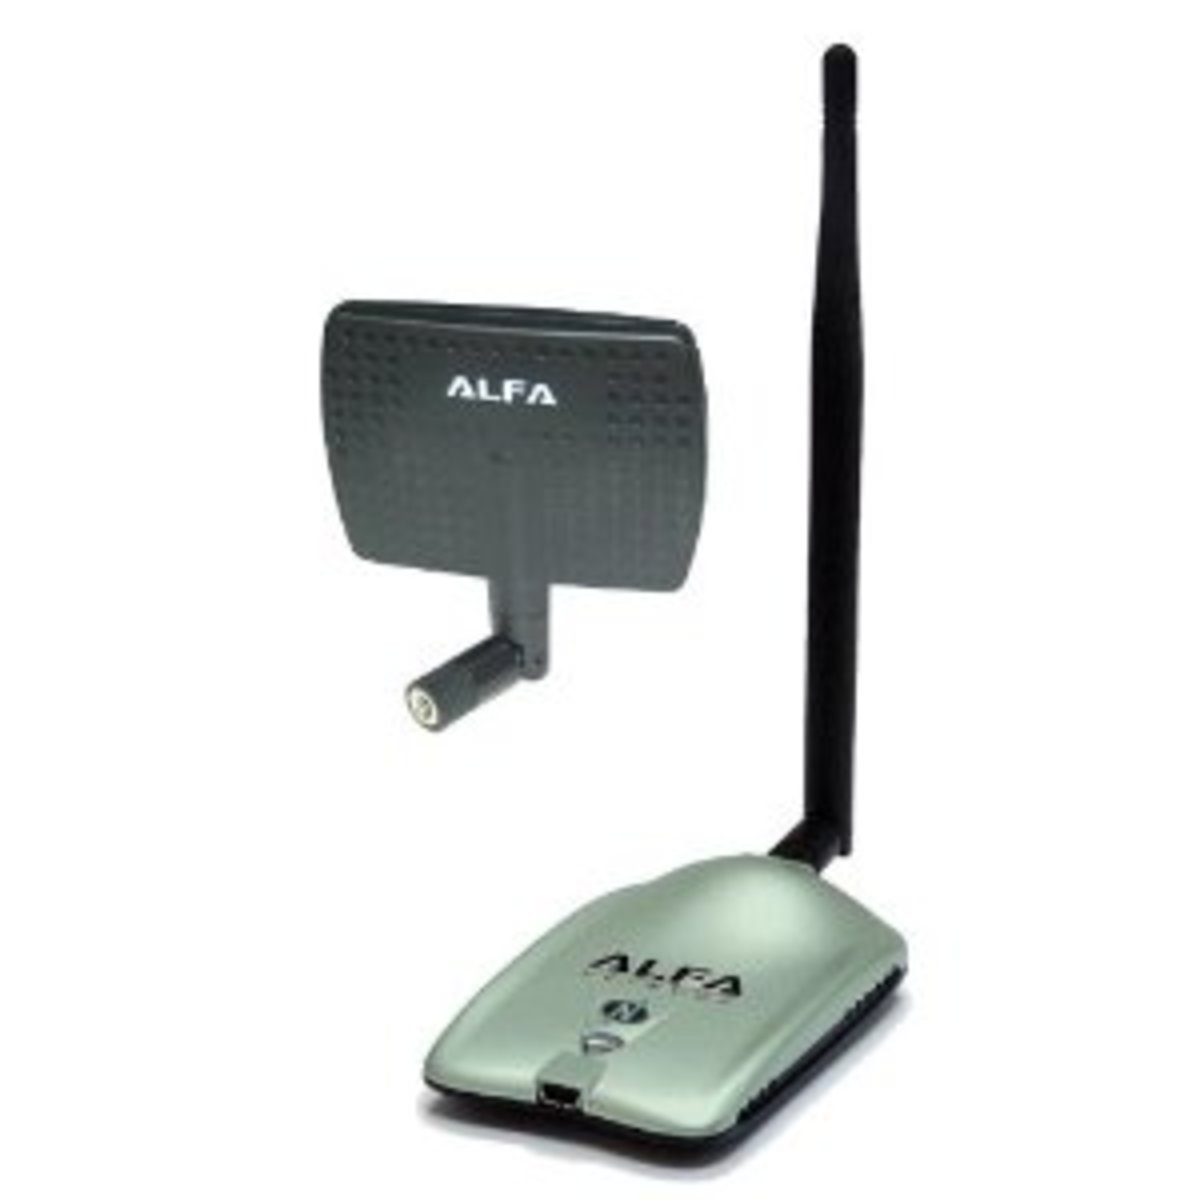 Alfa AWUS036NH Long Range USB Wifi Adapter Review